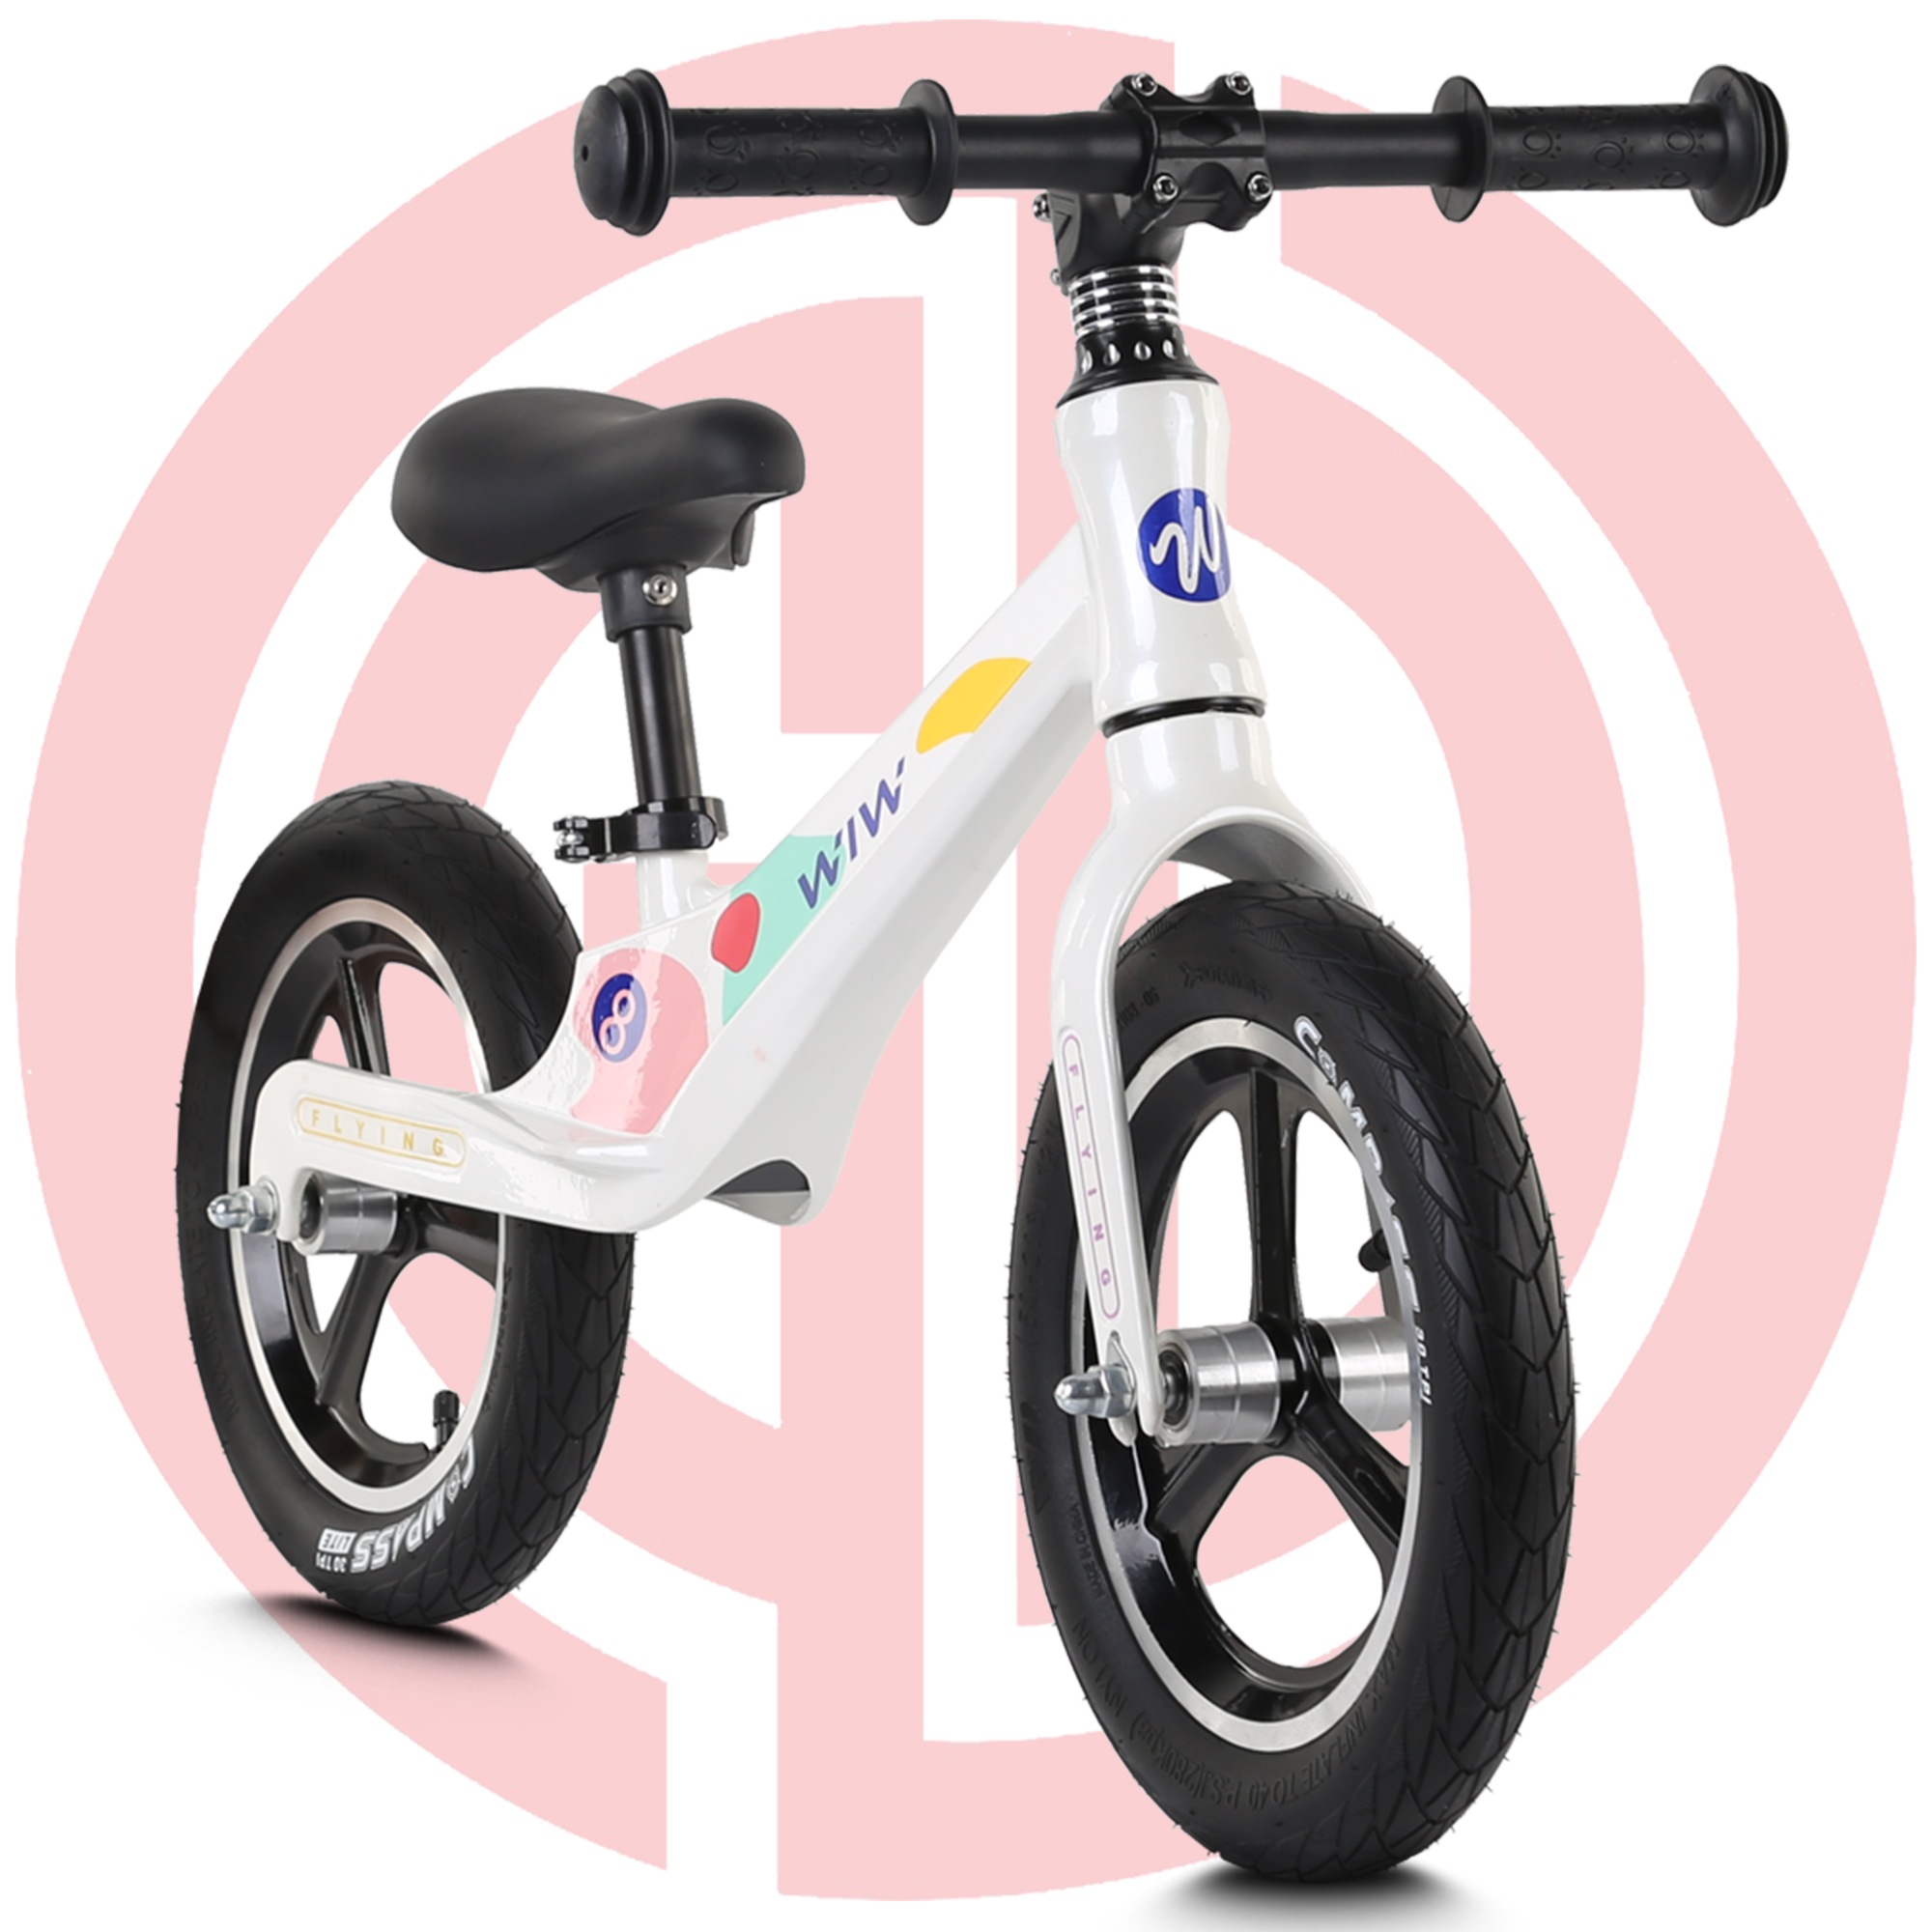 Hot New Products Pedal Assist ebike - HOT SELLING KIDS BALANCE BIKE：：Kids balance bike, featured kids bike, various designs, whole life warranty – GUODA